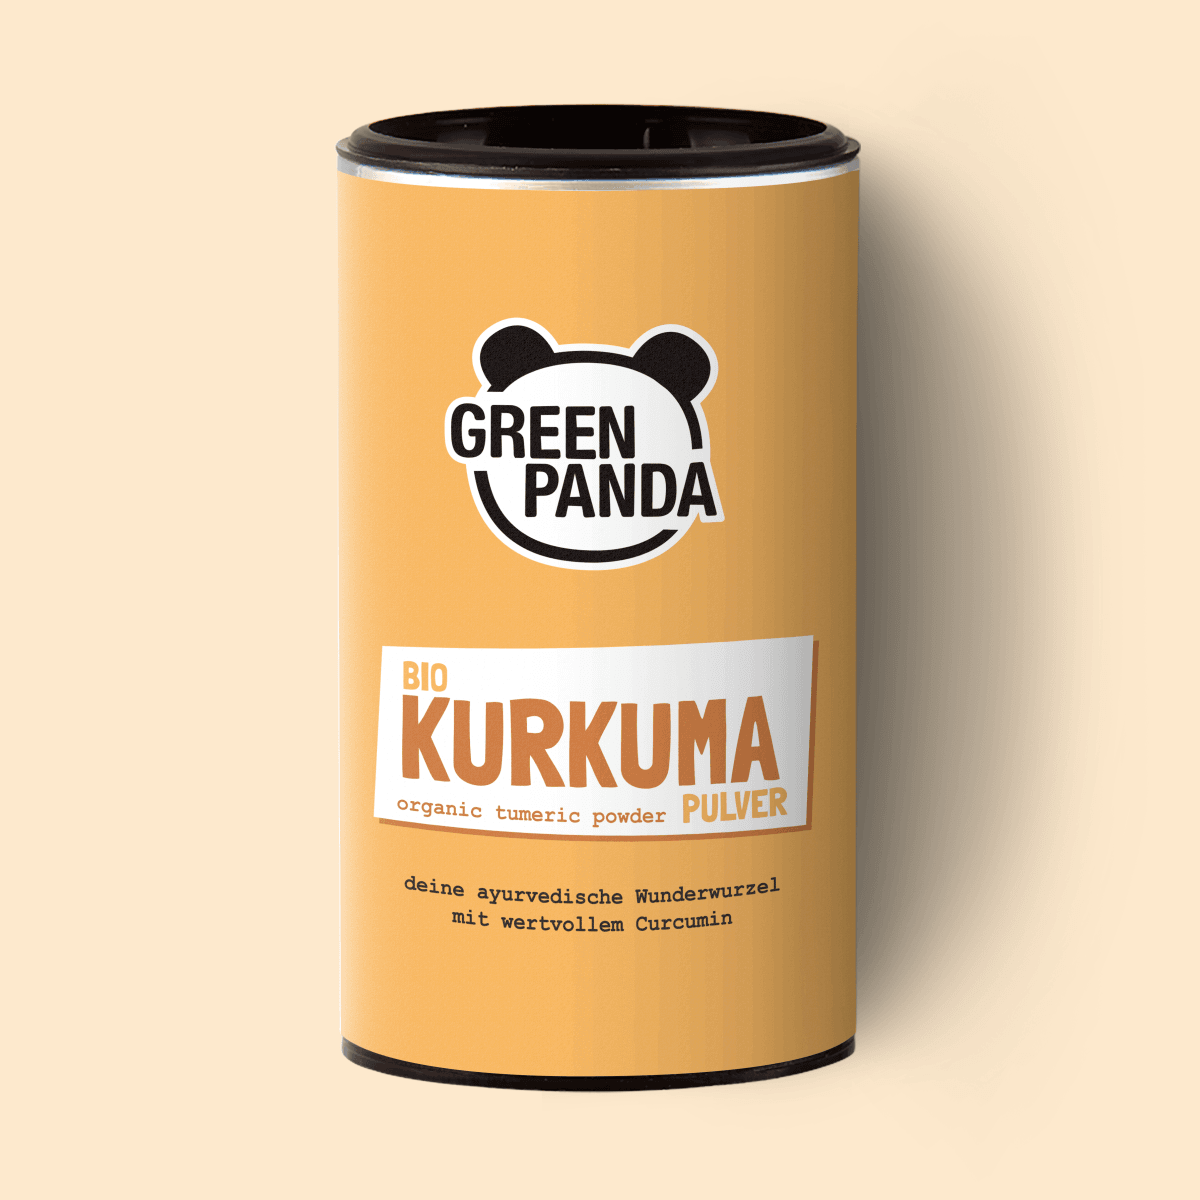 Bio Kurkuma Pulver aus Indien - Green Panda